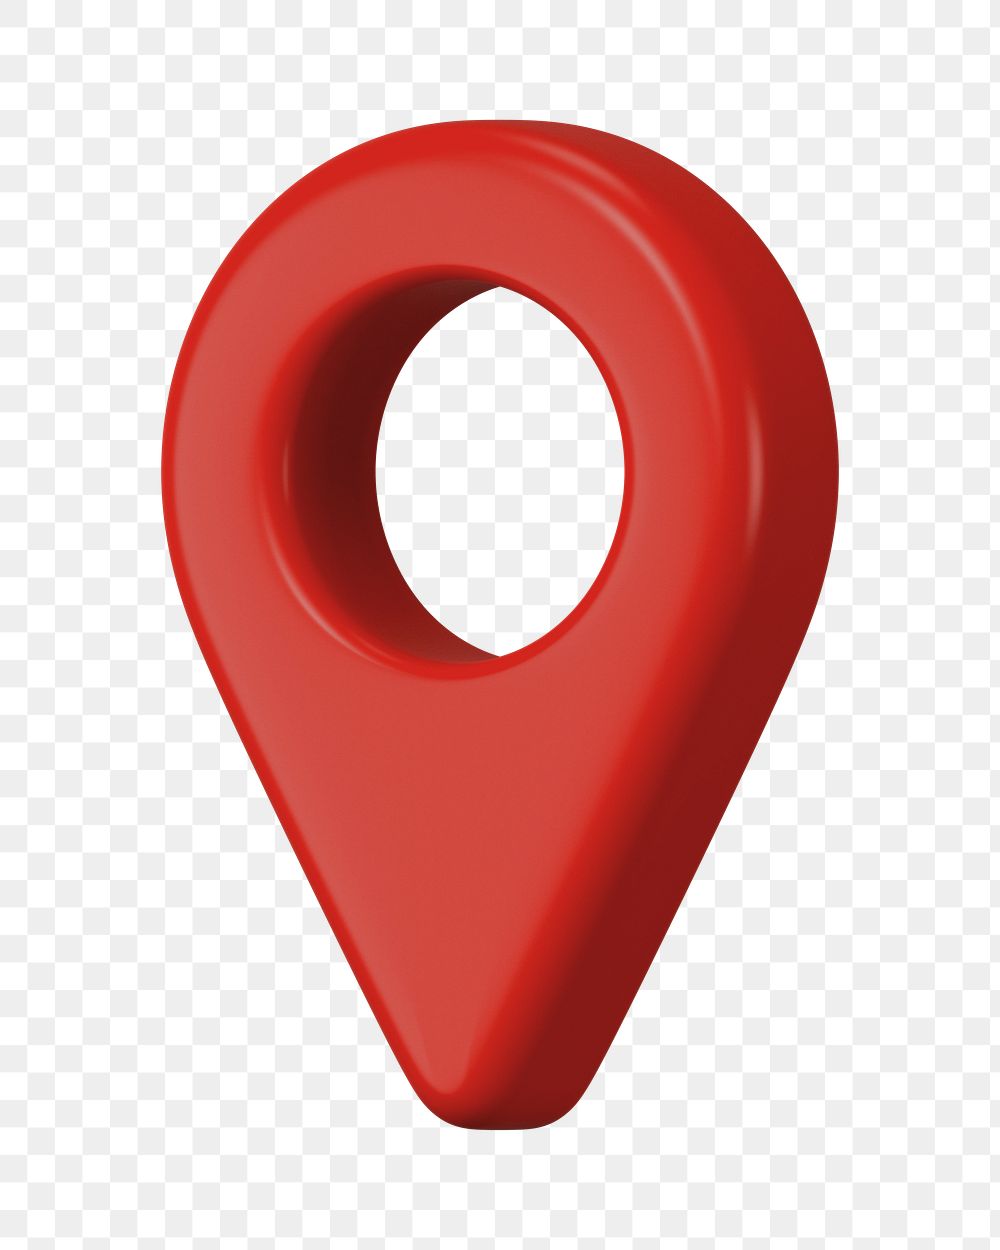 Red png current location symbol, transparent background